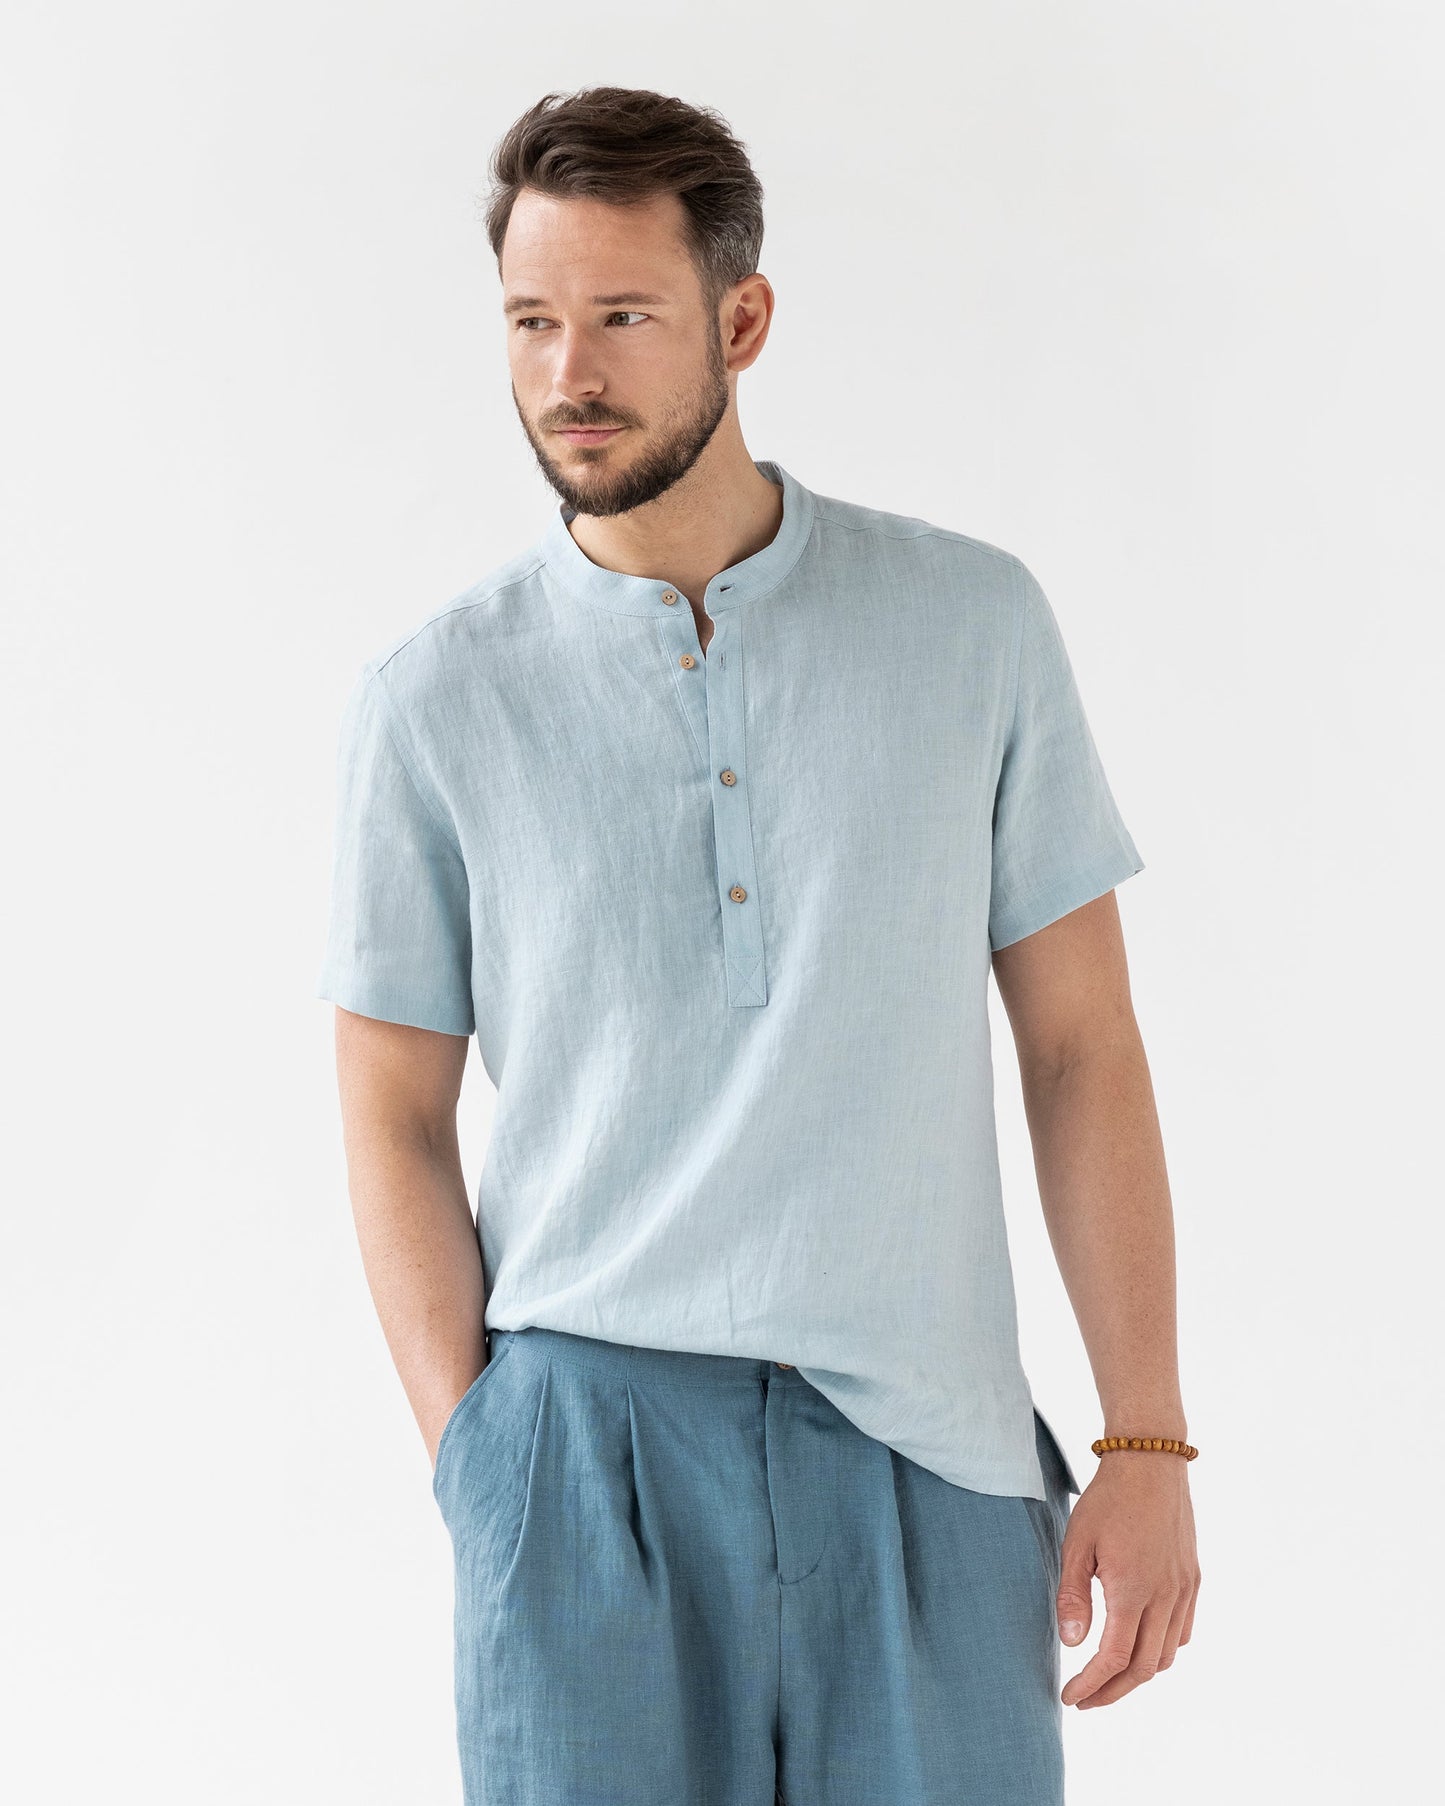 Short sleeve men's linen shirt PICTON in Dusty blue - MagicLinen